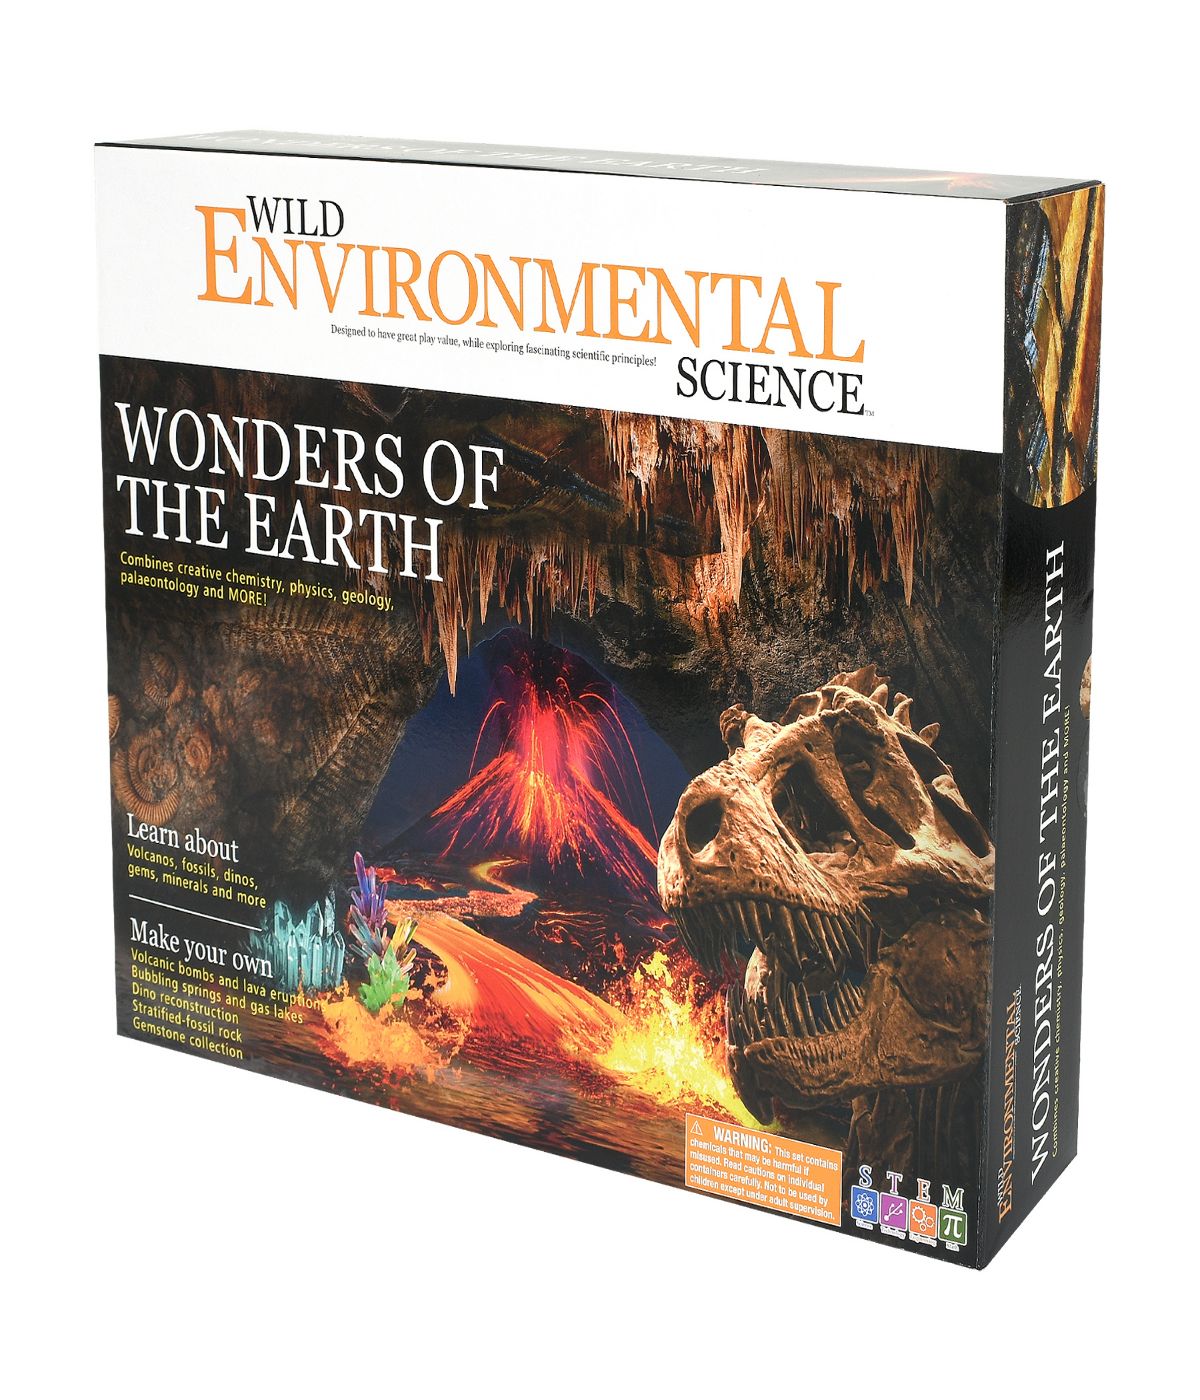 Wild Environmental Science - Wonders of the Earth Multi